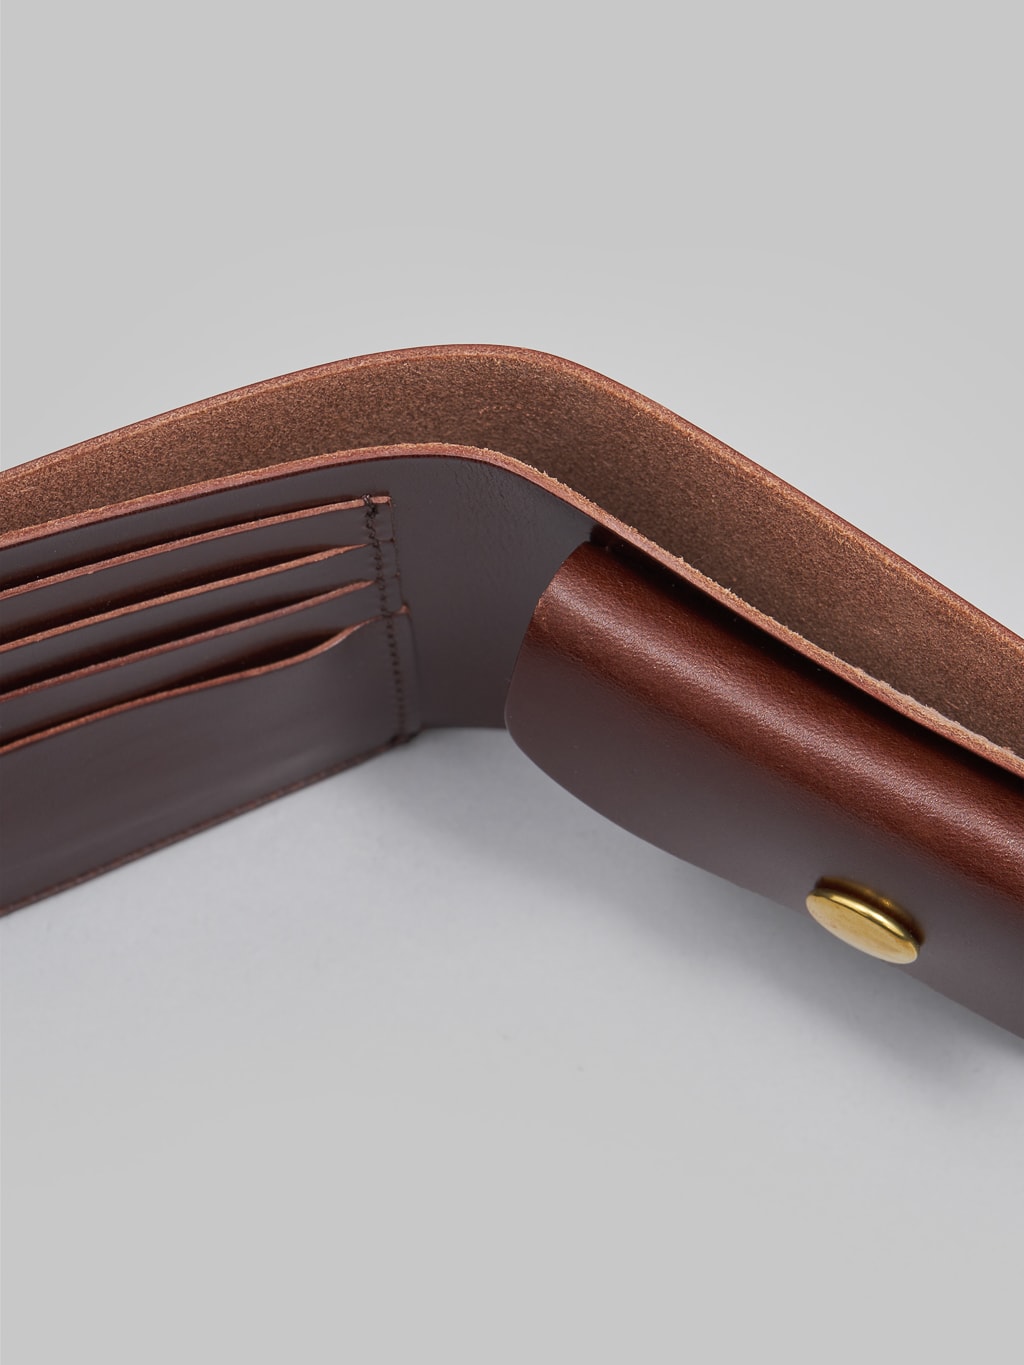 Kobashi Studio Leather Fold Wallet Brown